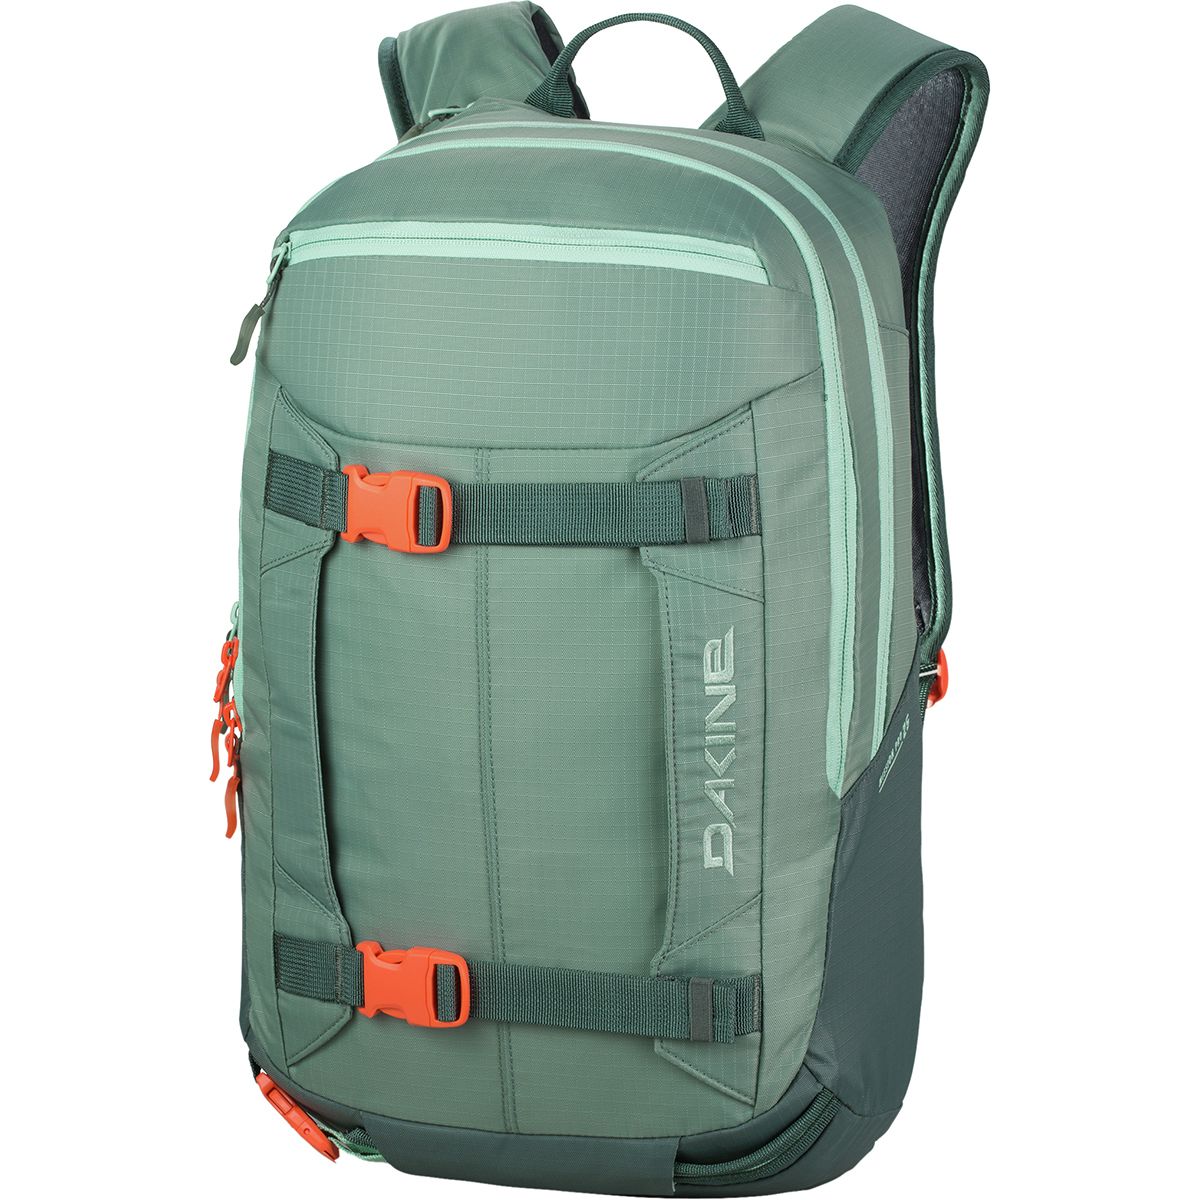 Mission Pro 25L Backpack - Women